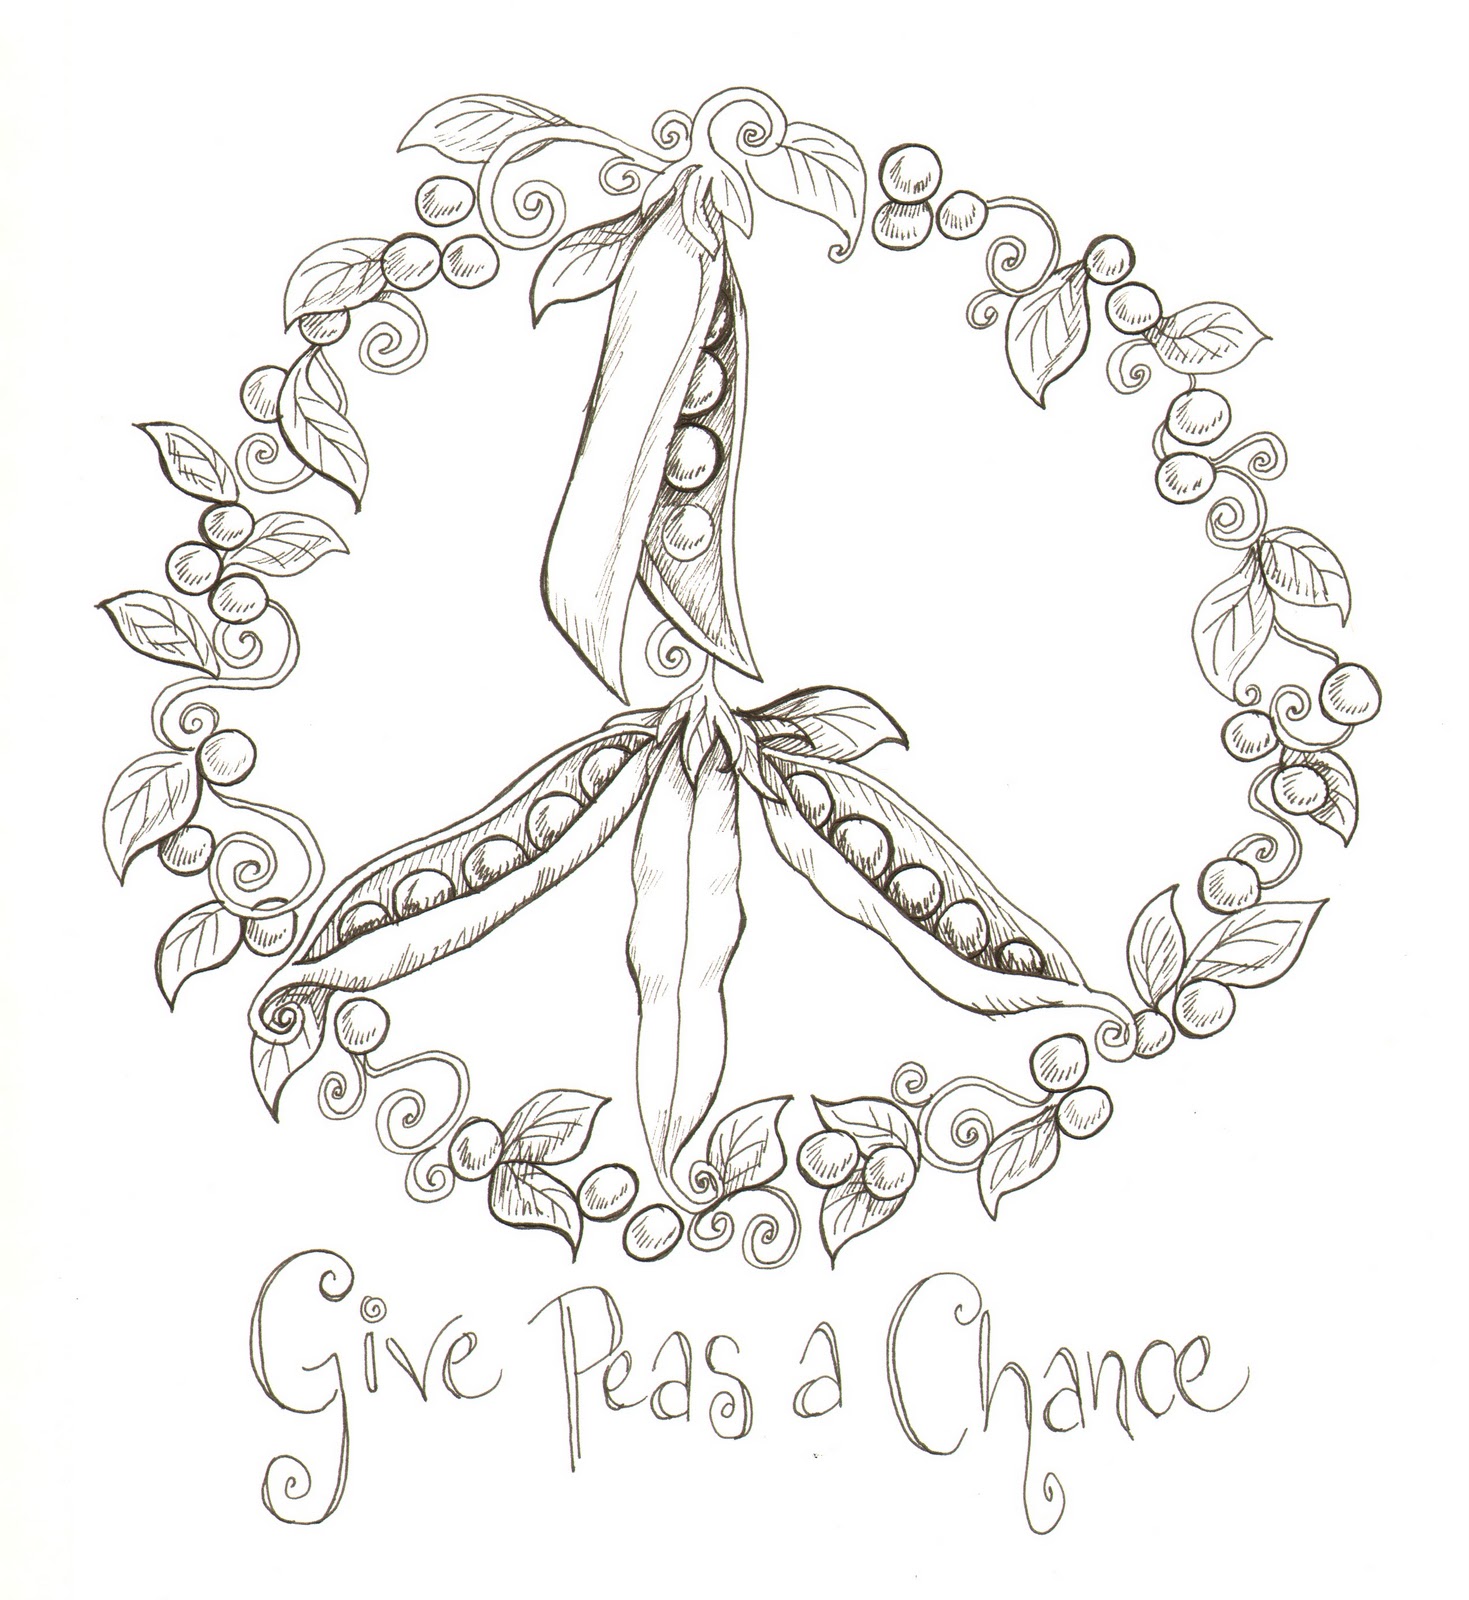 give+peas+a+chance.jpg